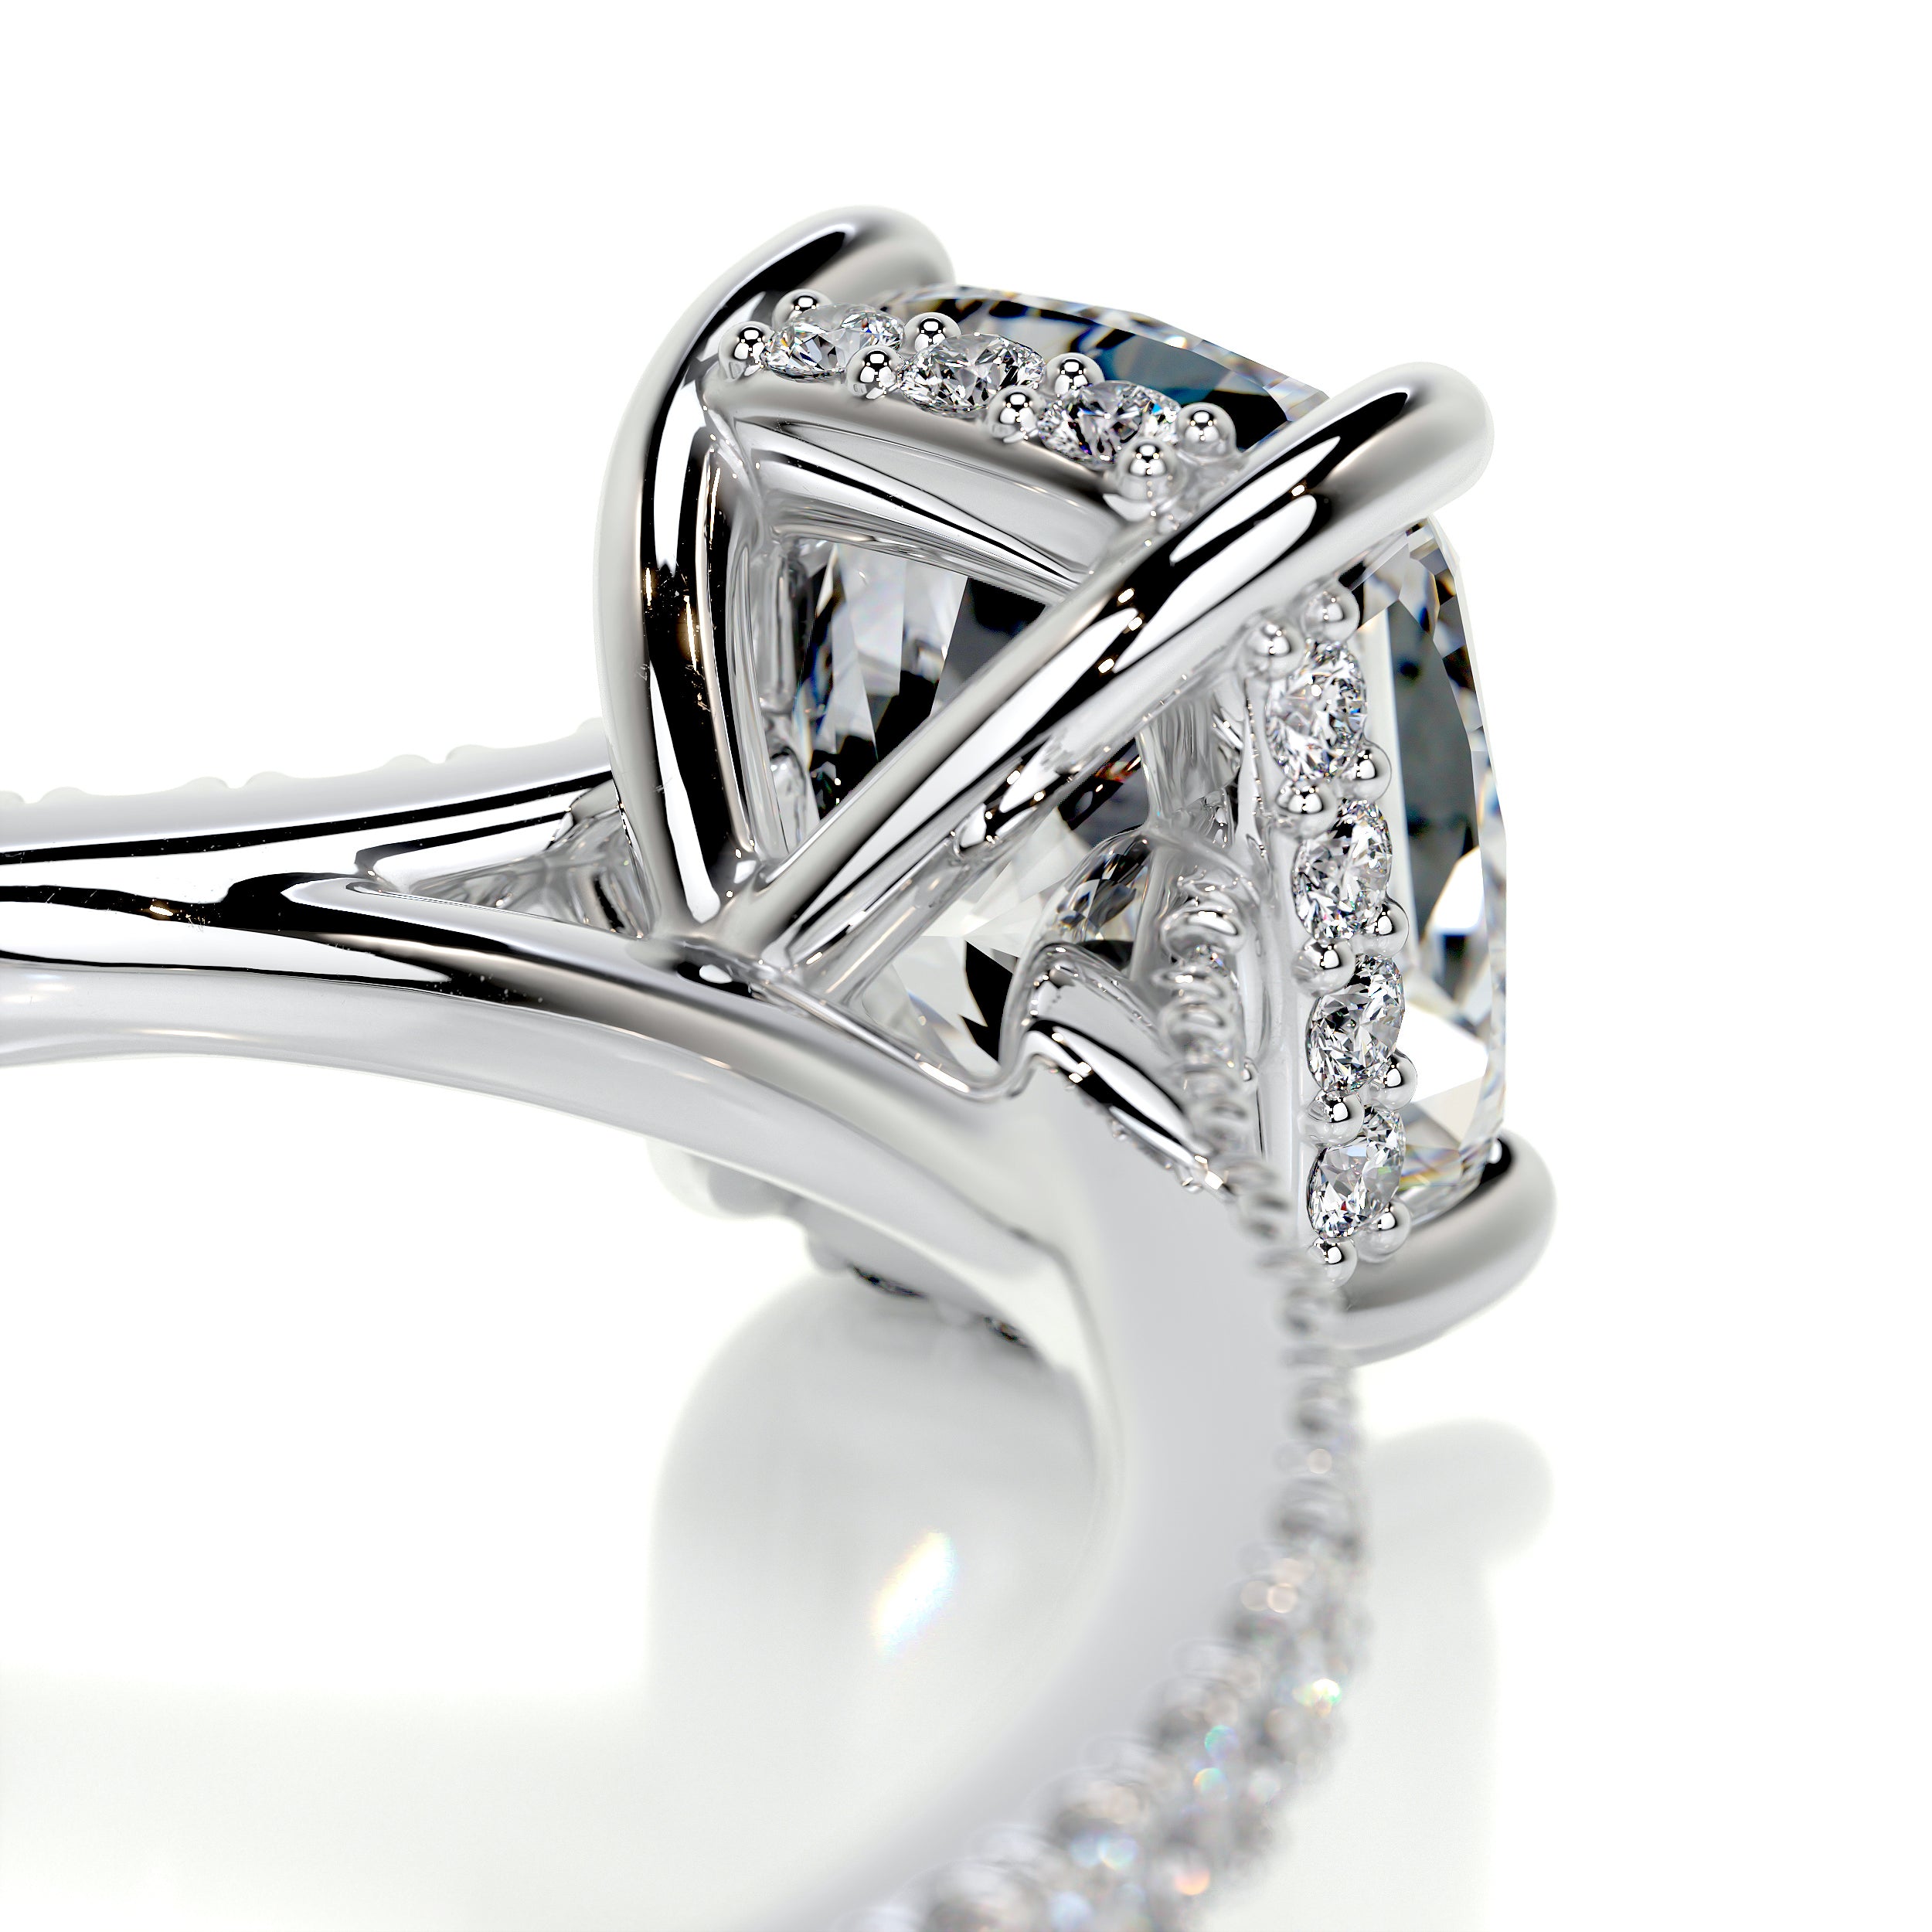 Deandra Diamond Engagement Ring   (1.75 Carat) -14K White Gold